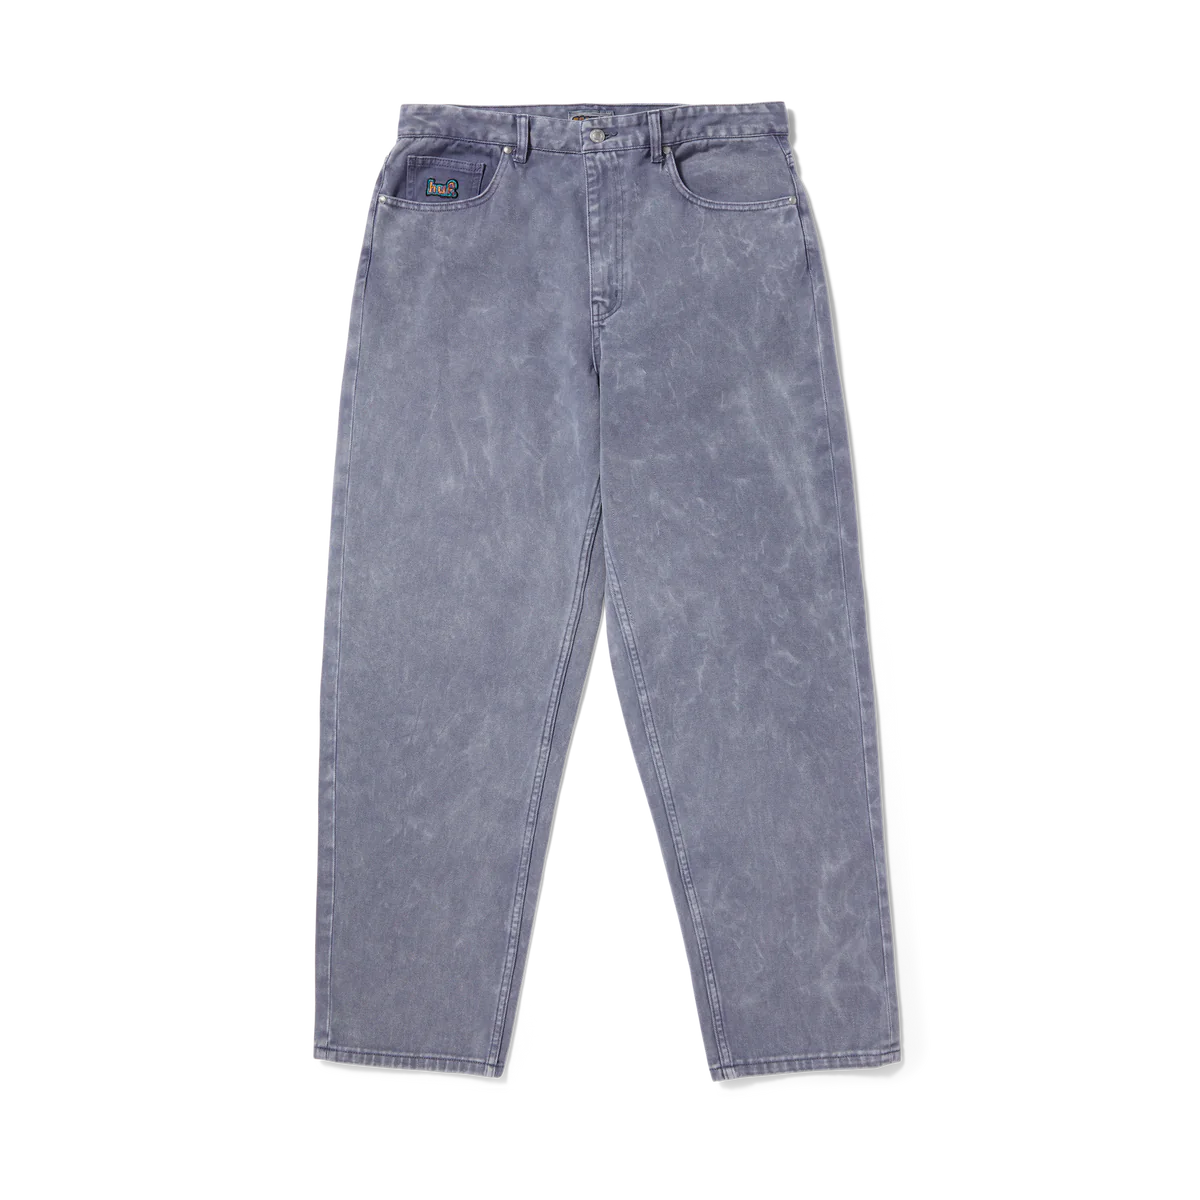 Huf Cromer Washed Pant (Dust Purple)